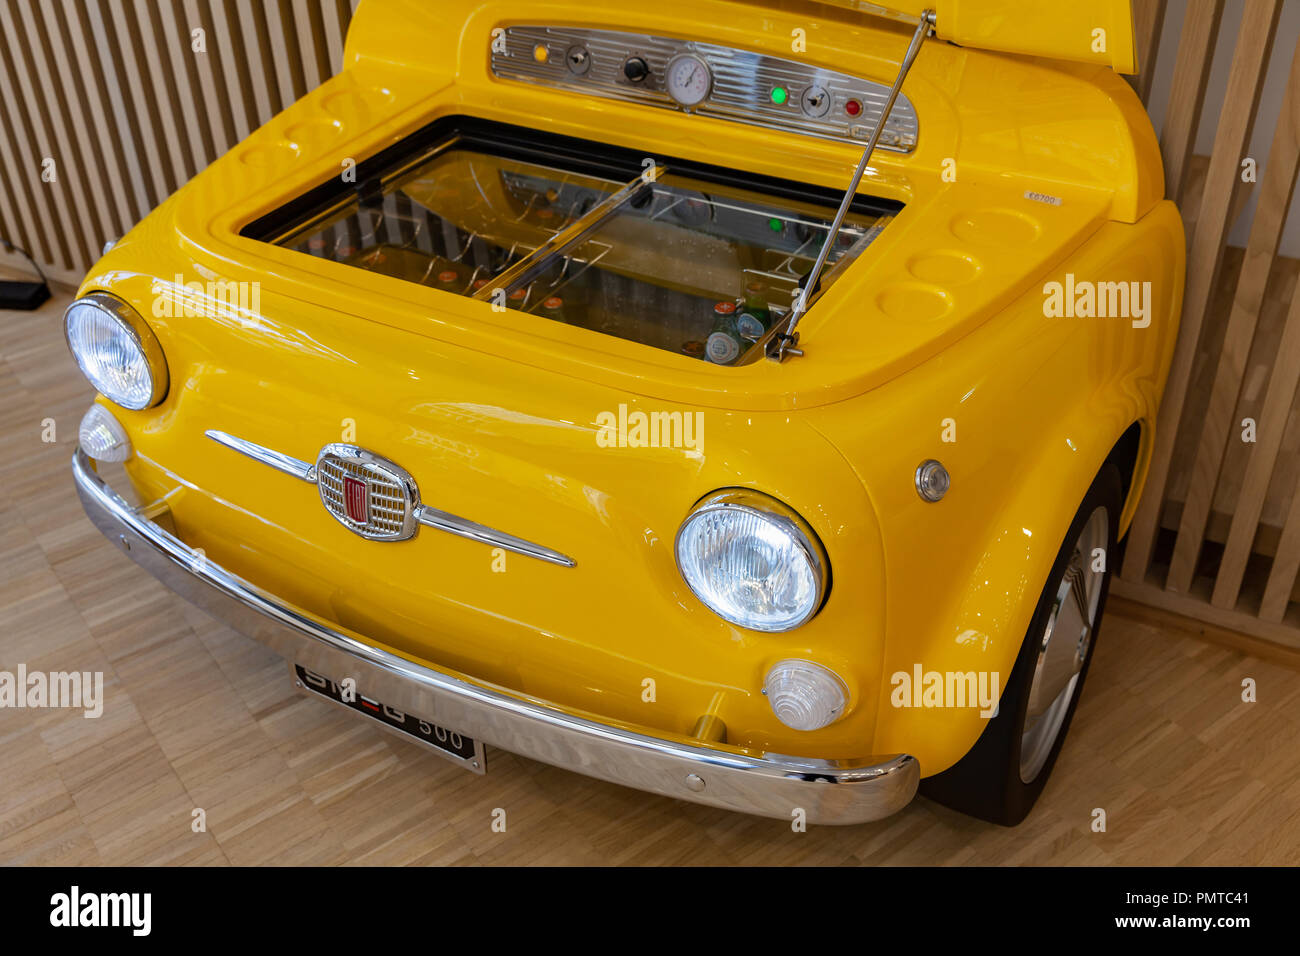 Smeg refrigerador doméstico fotografías e imágenes de alta resolución -  Alamy